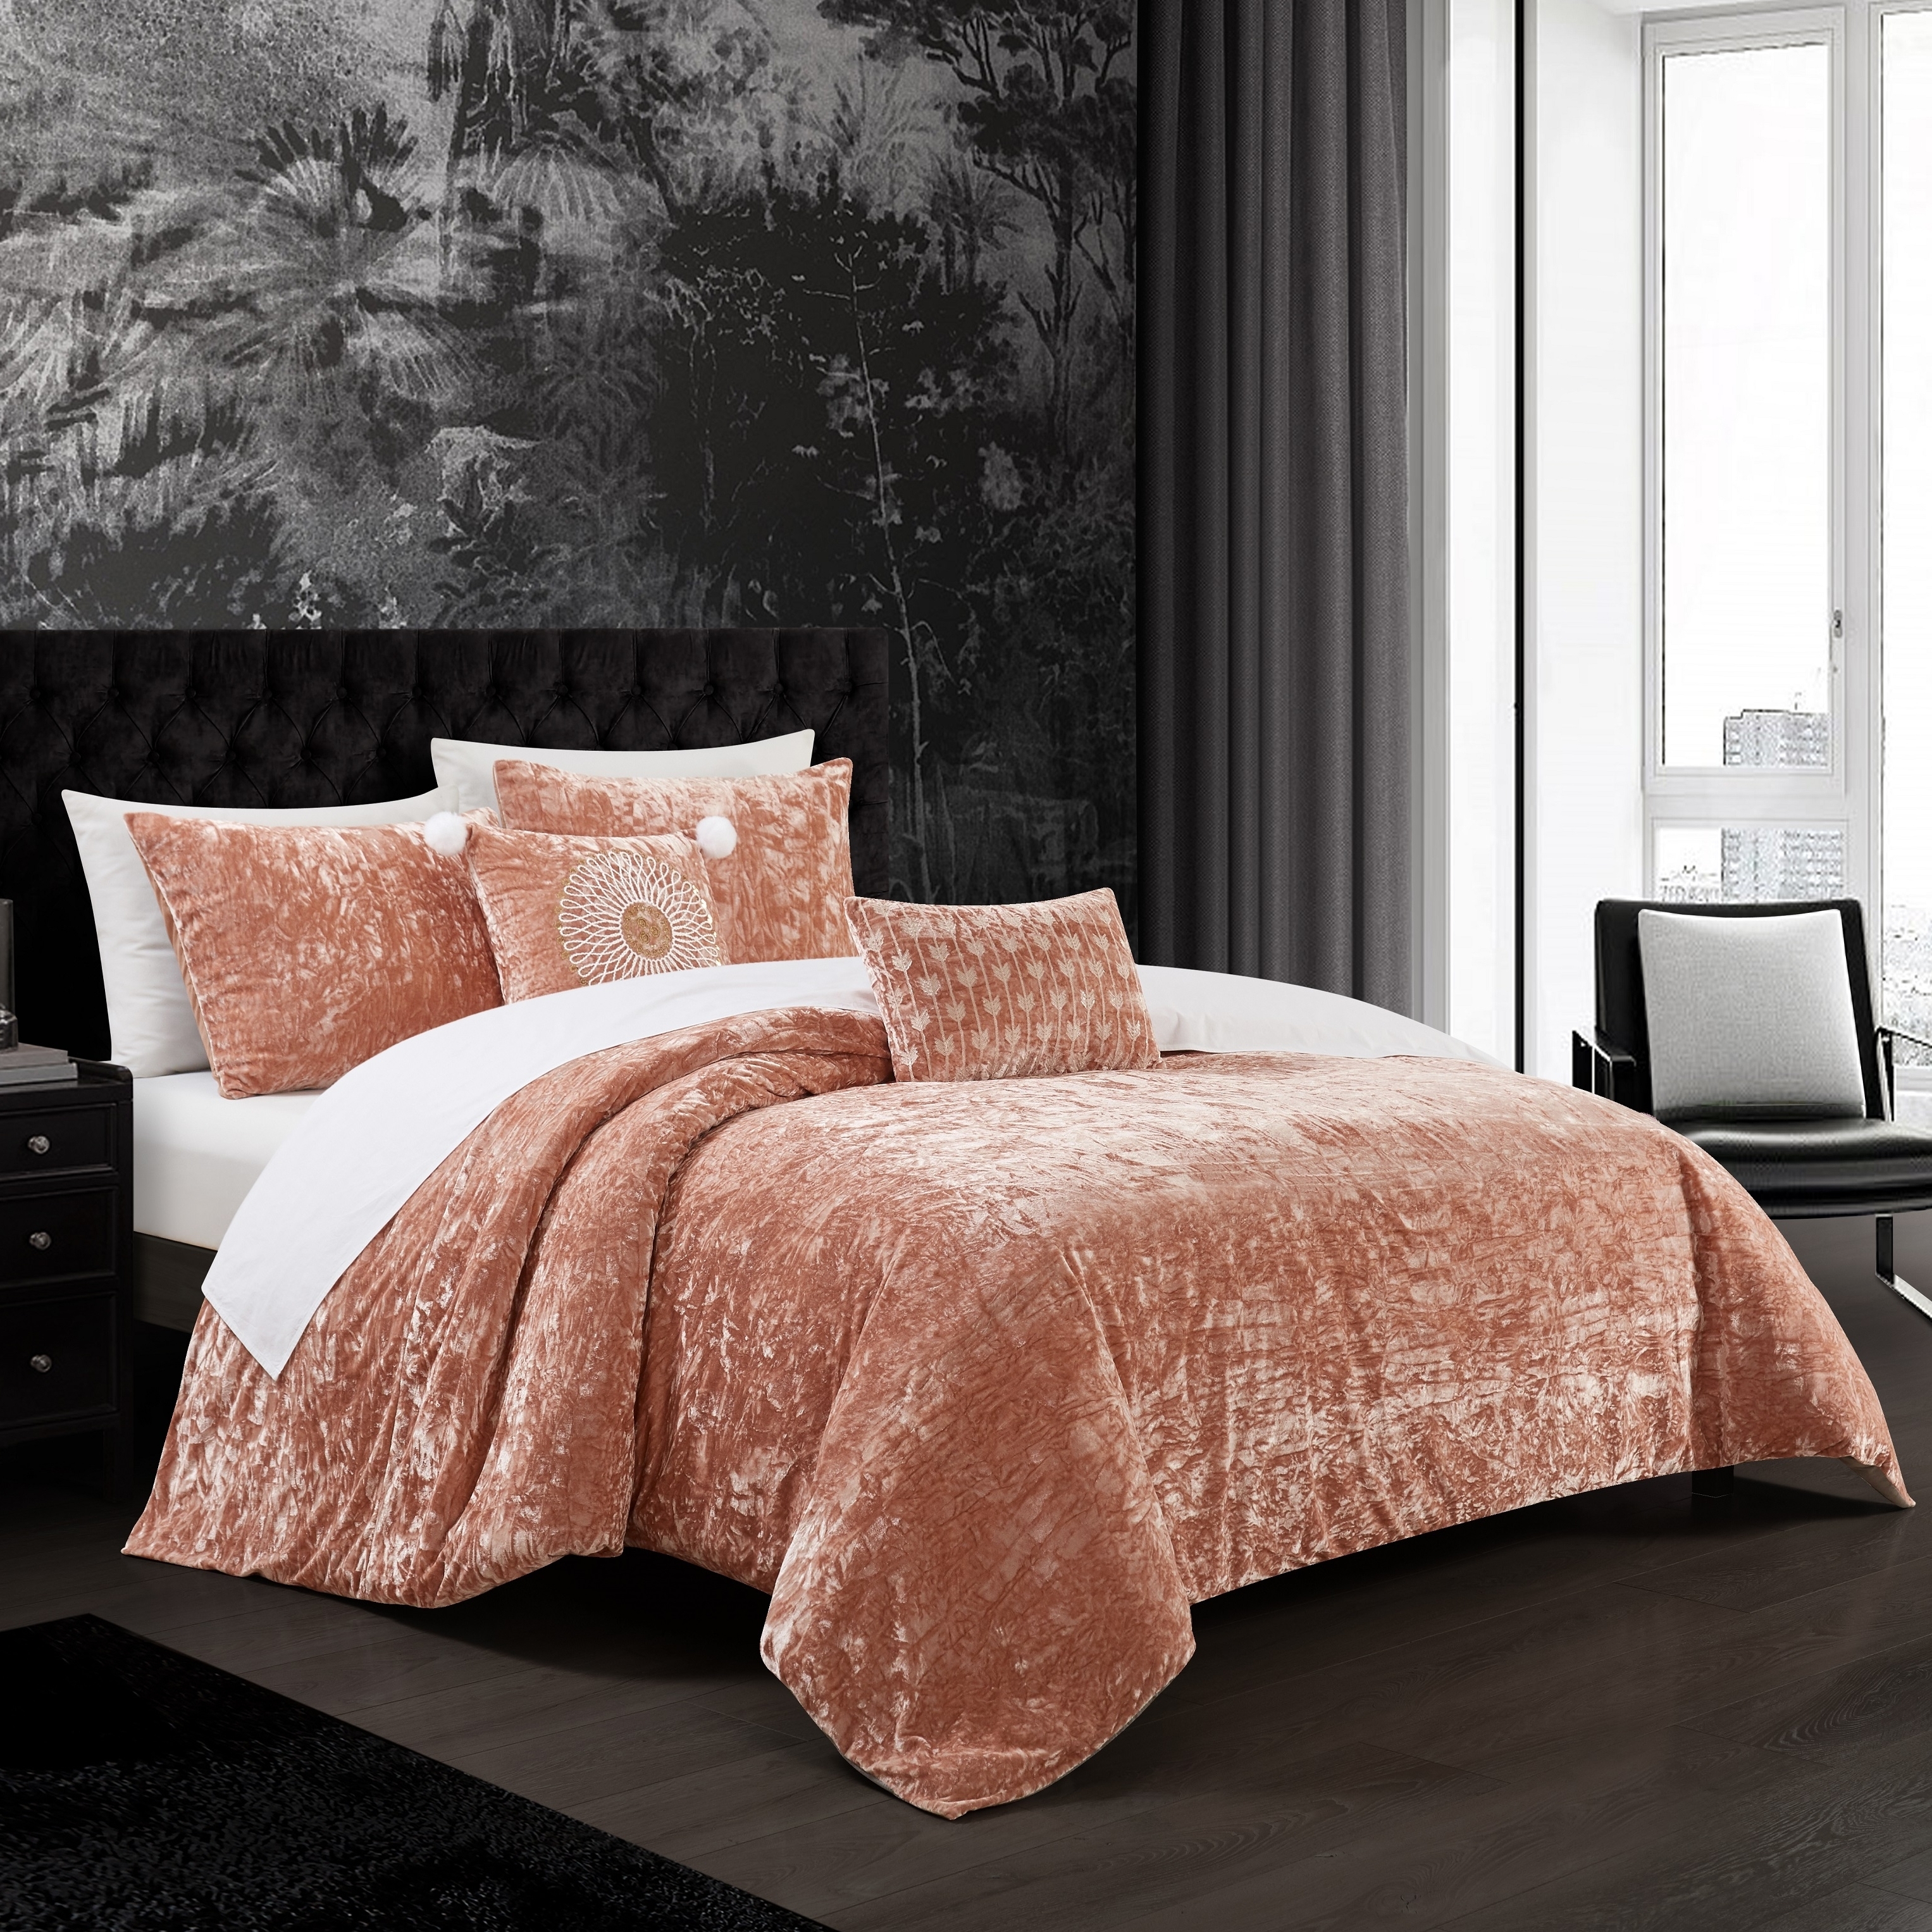 Giuliana 5 Piece Comforter Set Crinkle Crushed Velvet Bedding - Blush, King